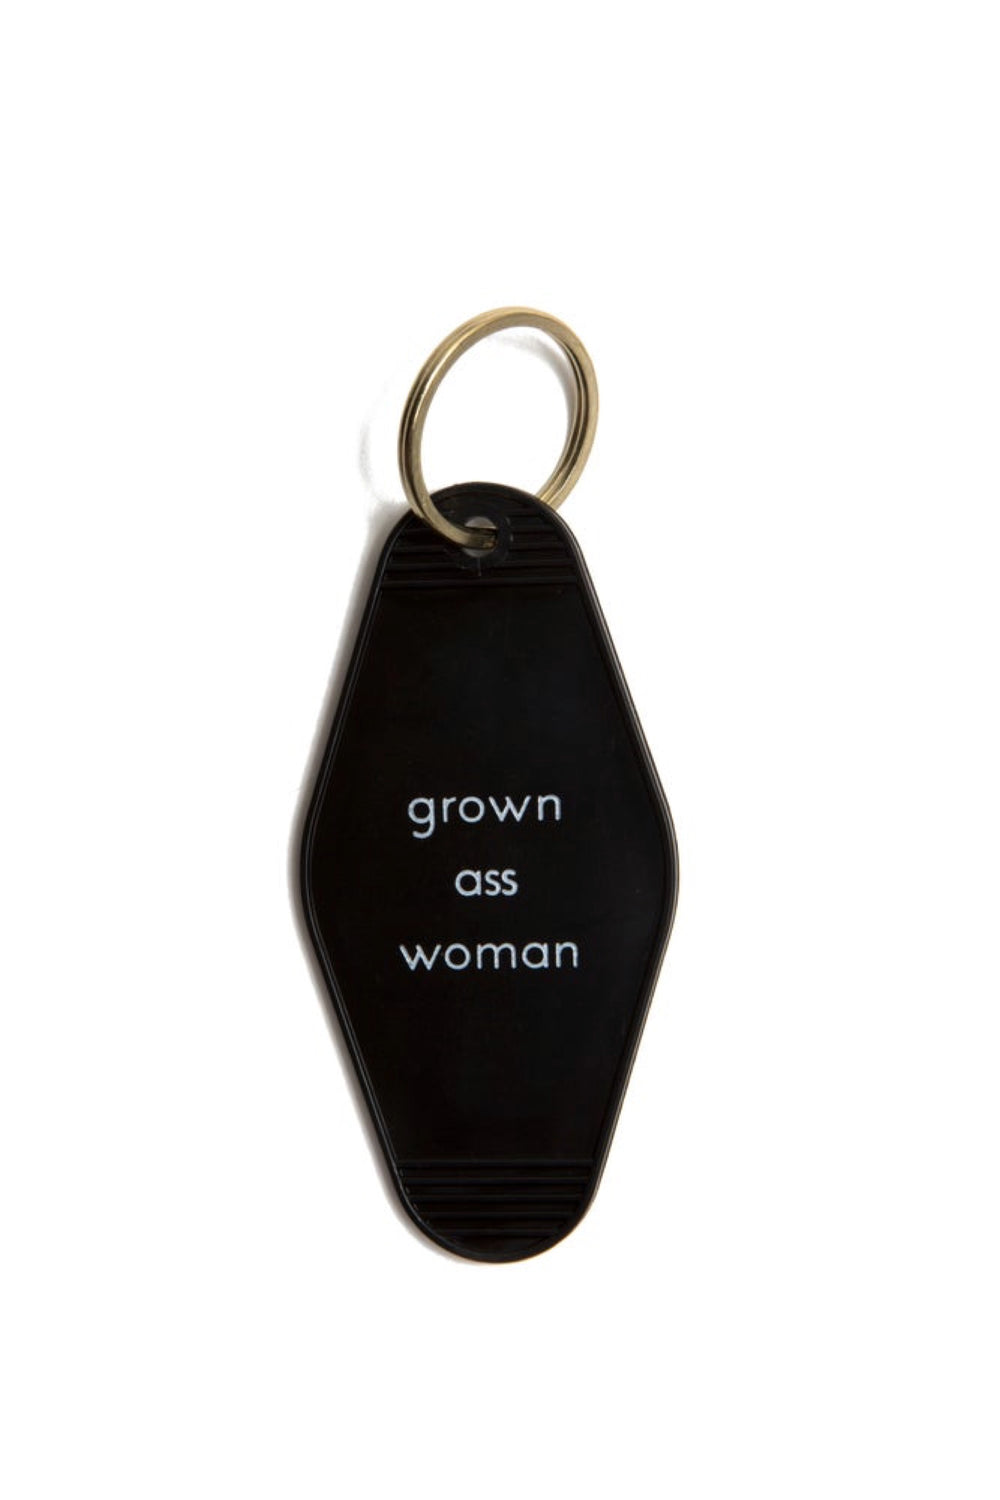 Grown Woman Keychain